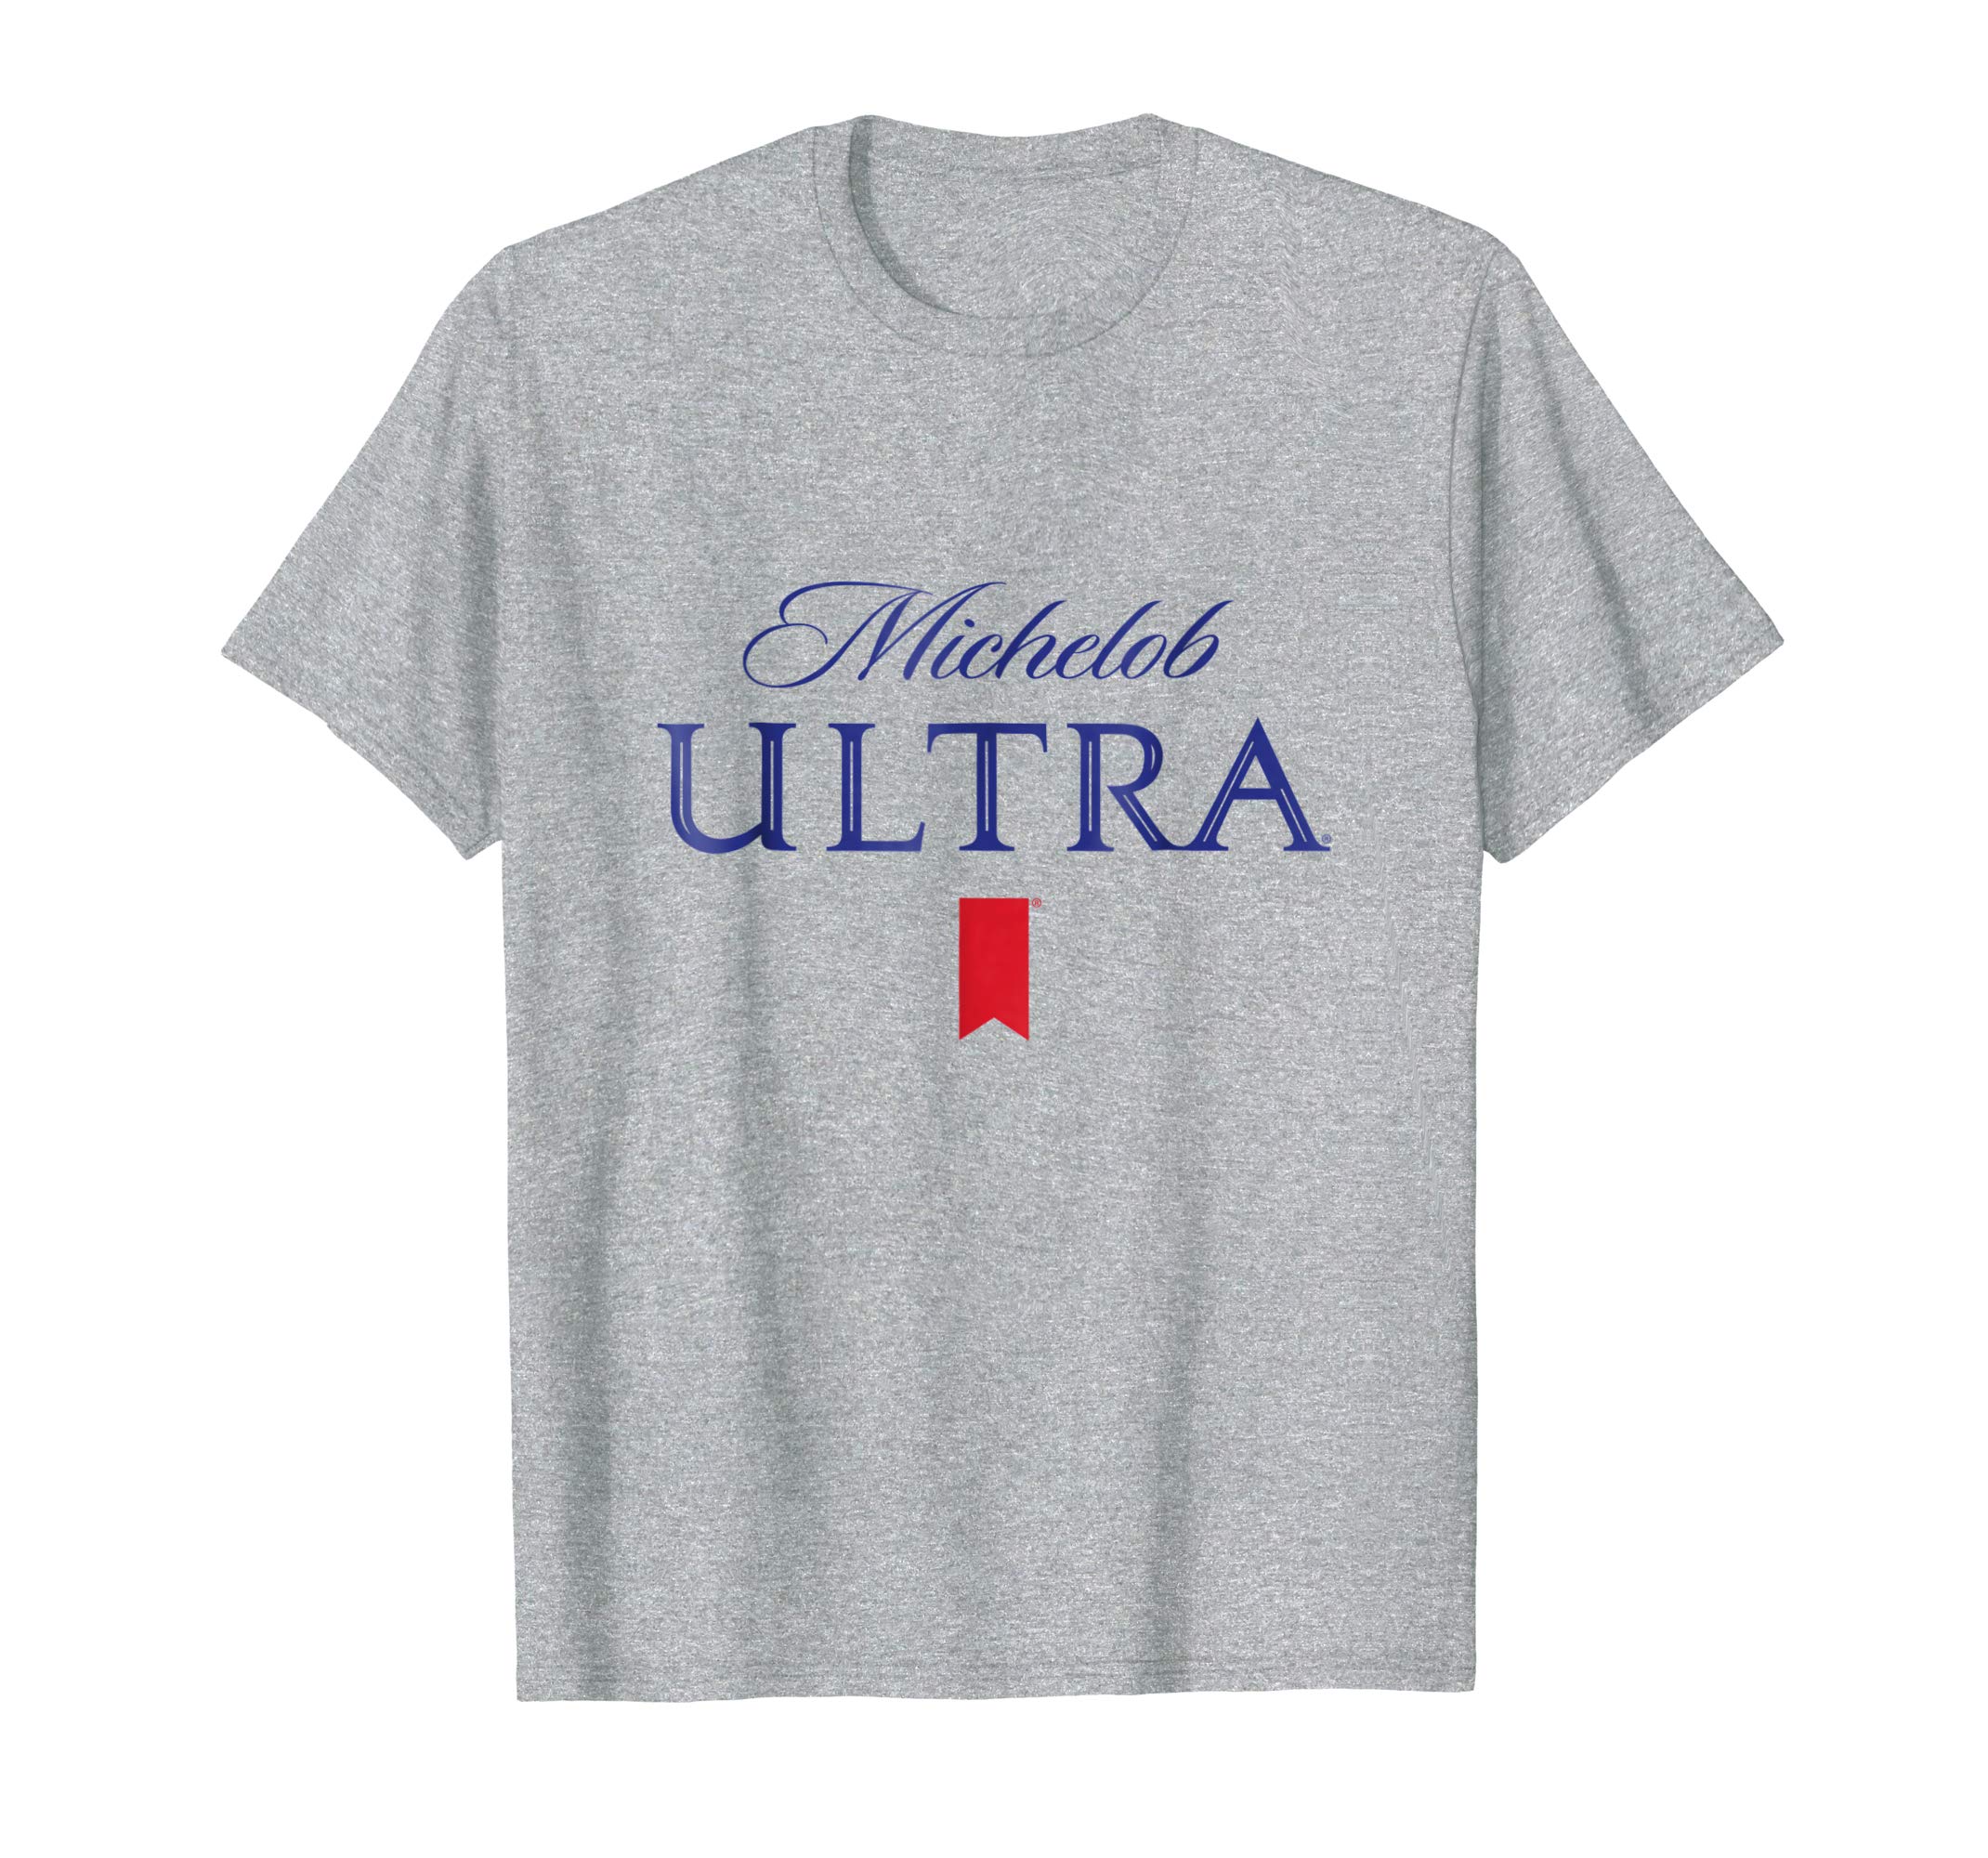 Michelob Logo - Amazon.com: Michelob Ultra Logo T-Shirt: Clothing